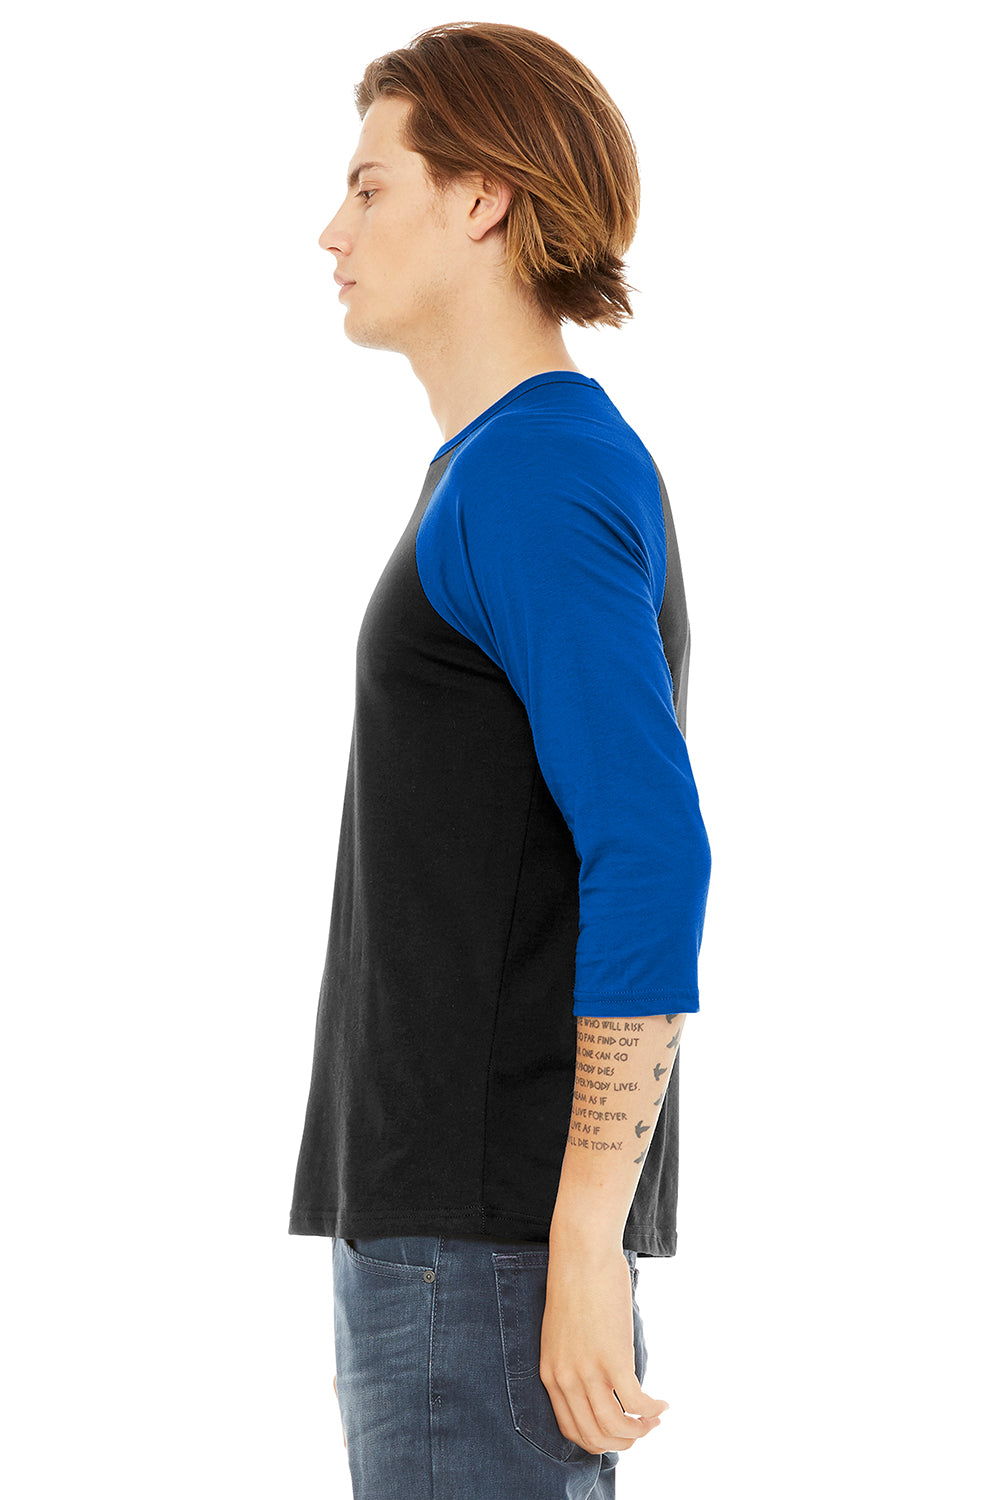 Bella + Canvas BC3200/3200 Mens 3/4 Sleeve Crewneck T-Shirt Black/Royal Blue Model Side